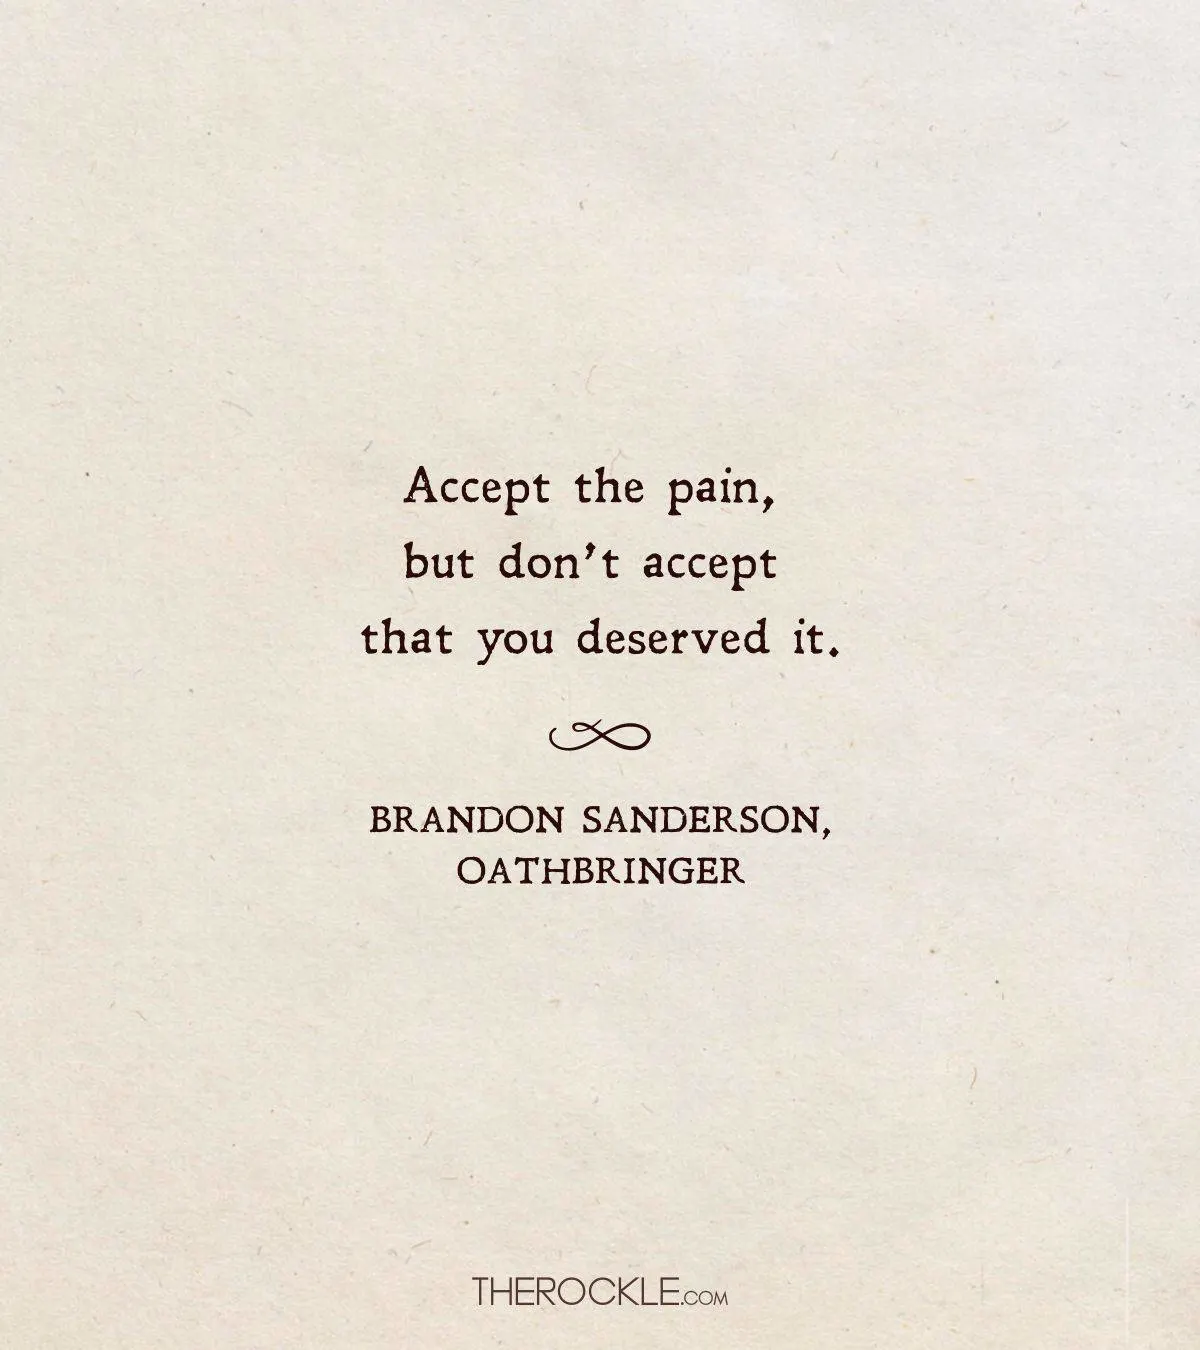 Sanderson quote on self-worth